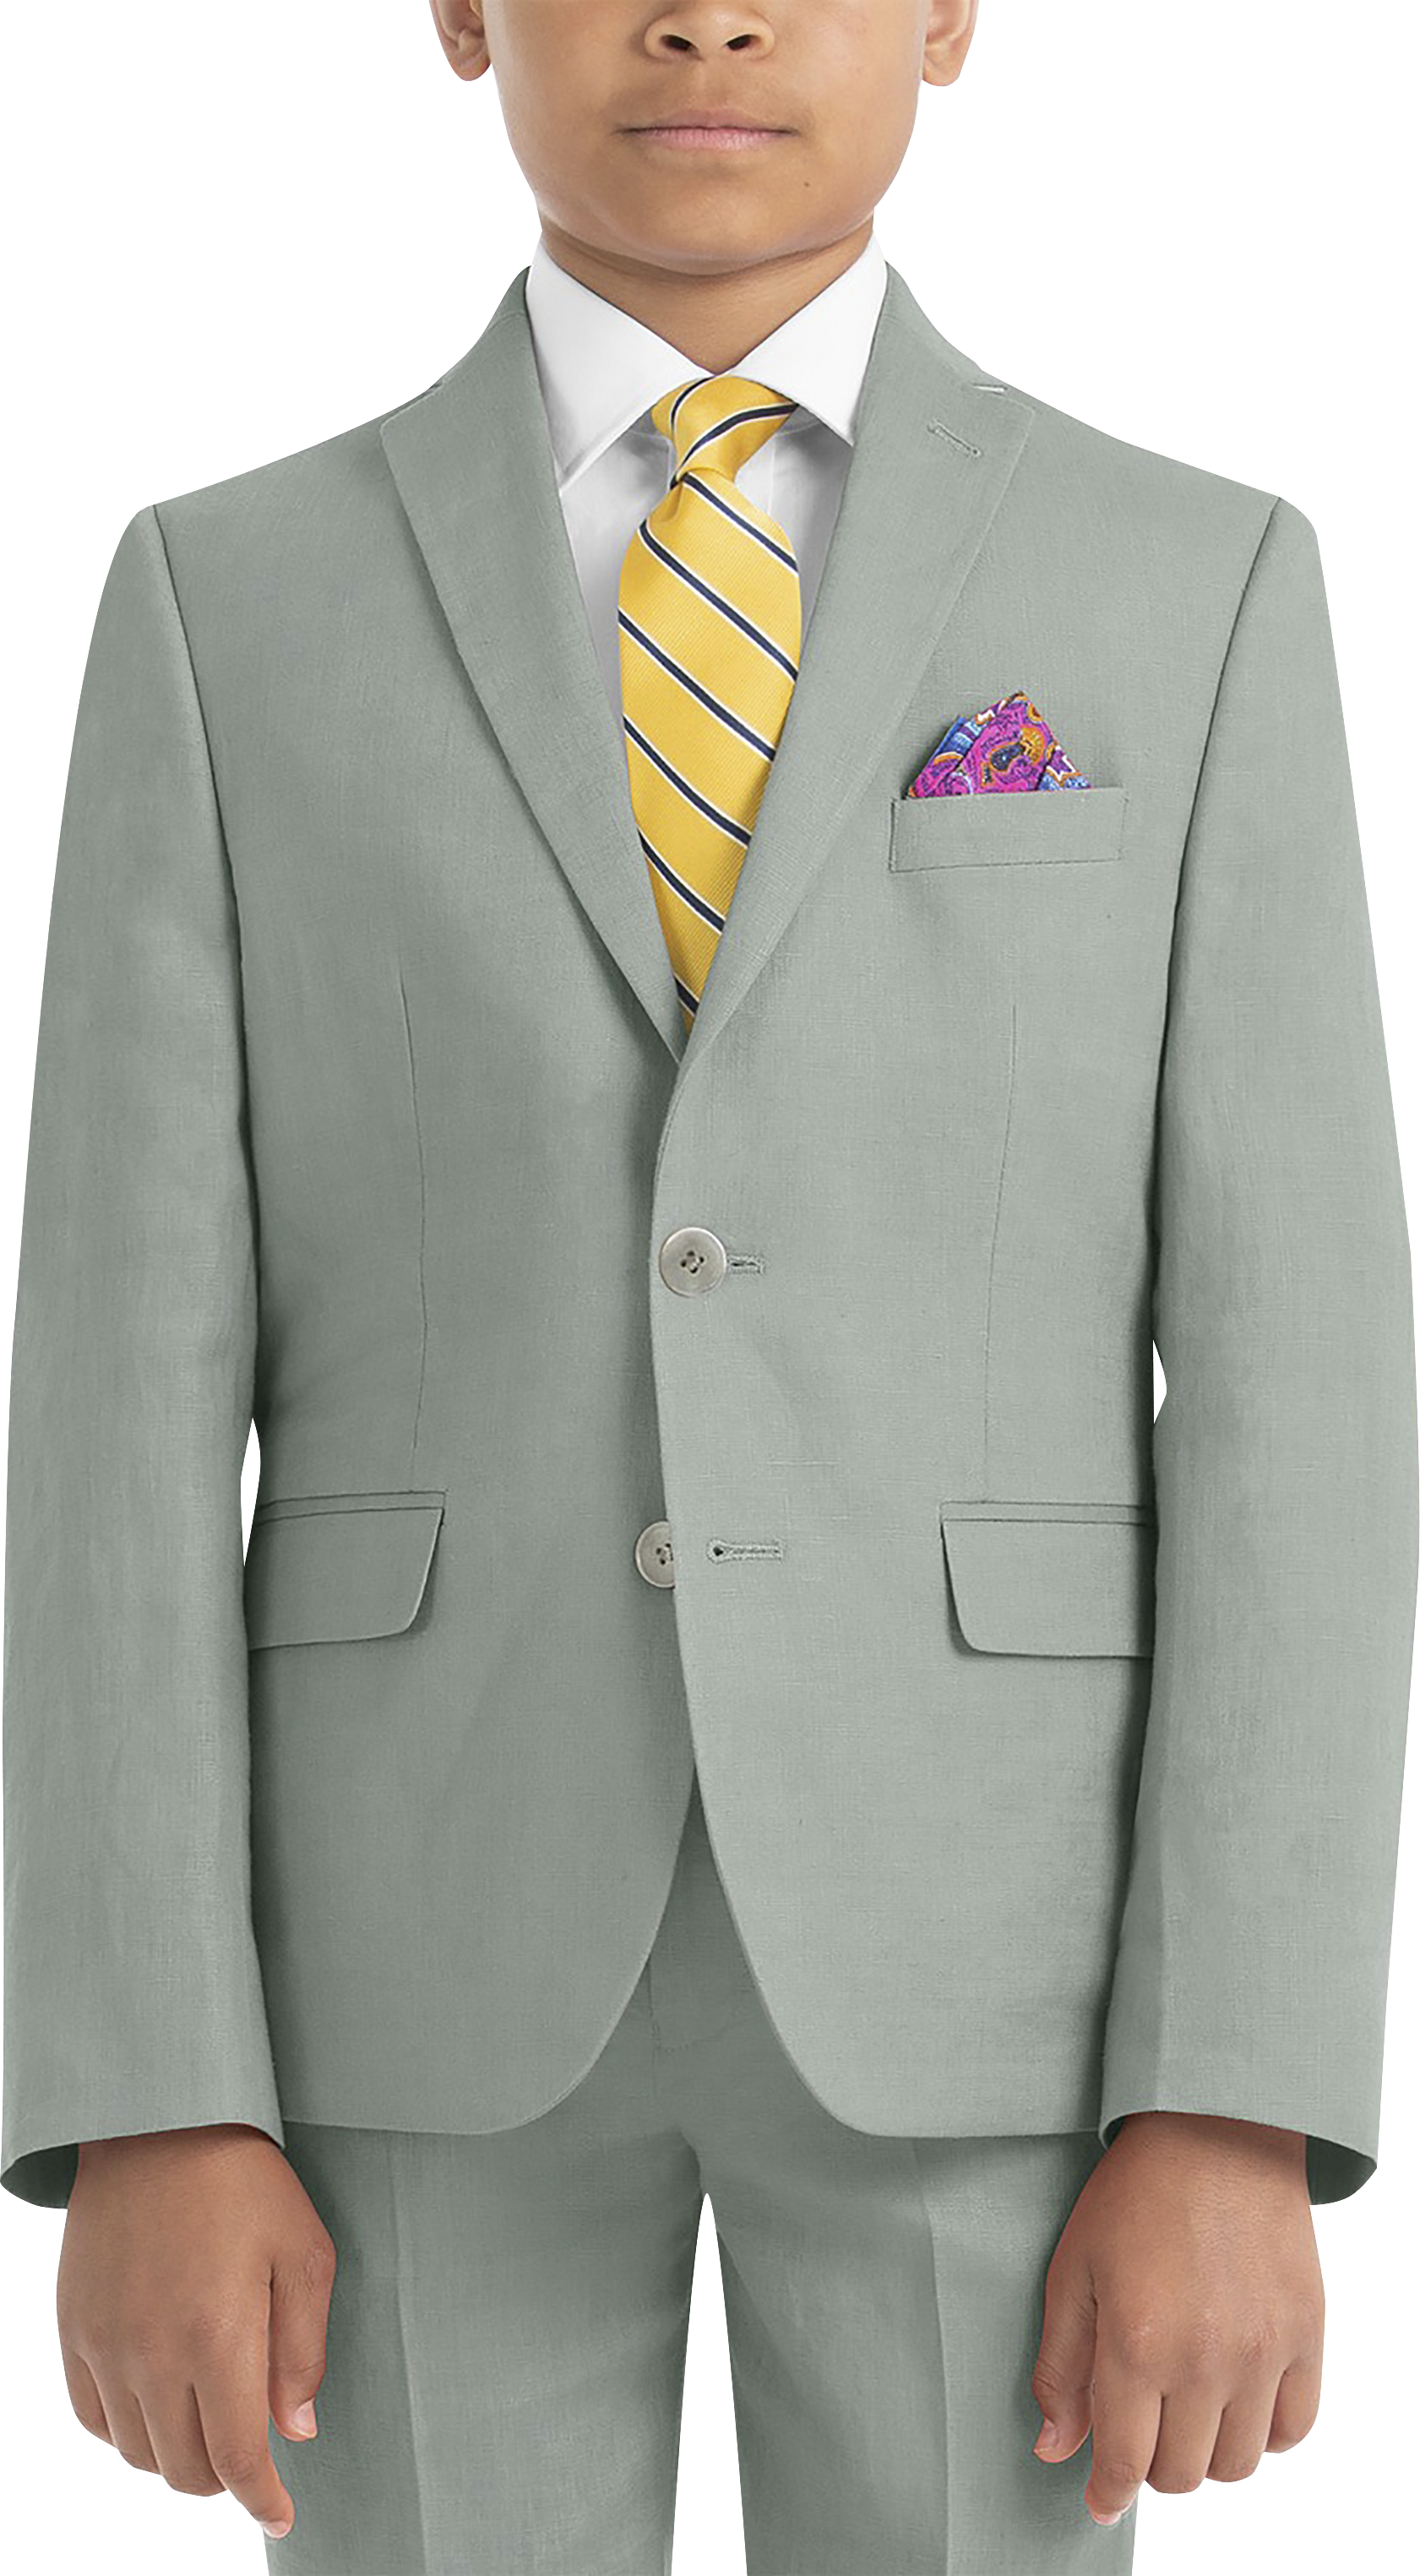 Lauren By Ralph Lauren Boys (Sizes 8-20) Suit Separates Coat, Sage